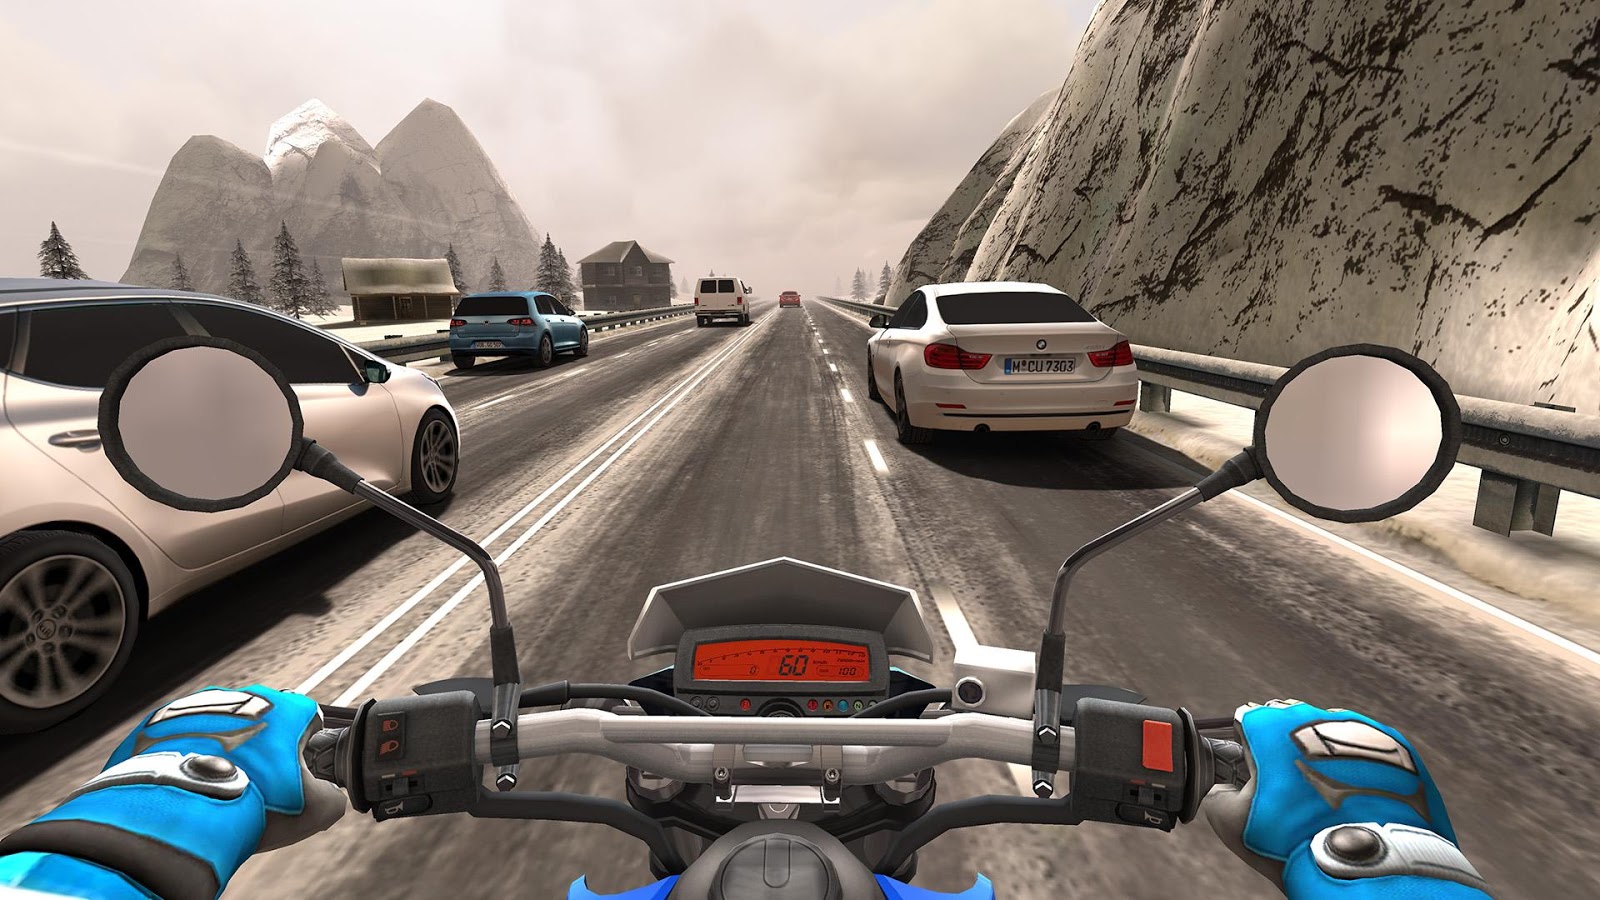 download traffic rider 2 mod apk